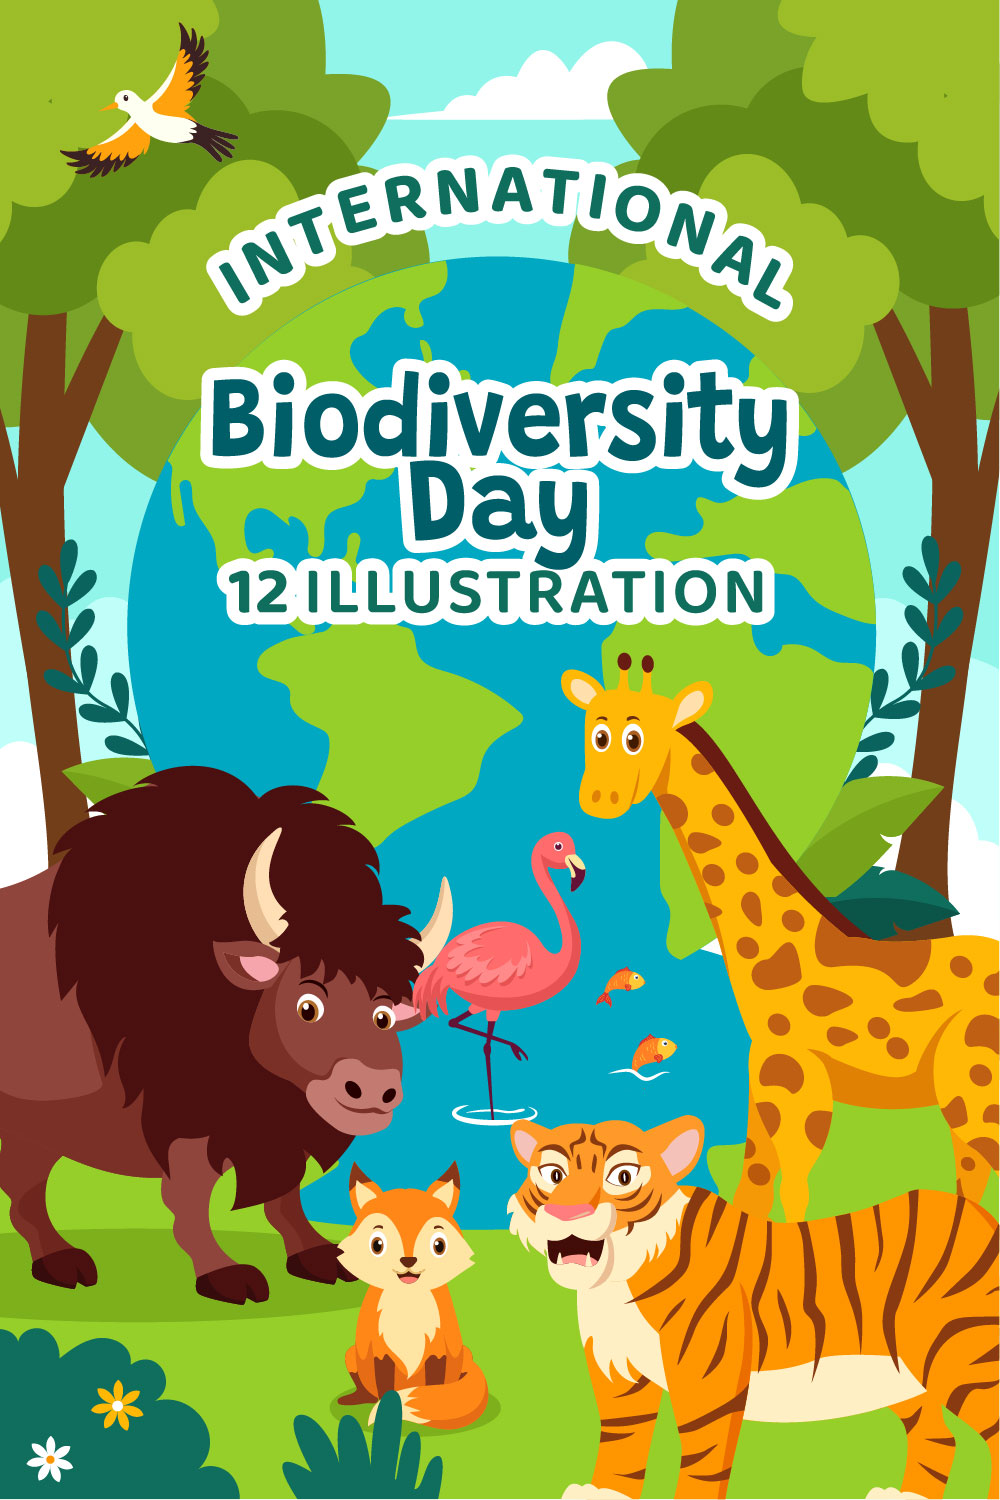 12 World Biodiversity Day Illustration pinterest preview image.